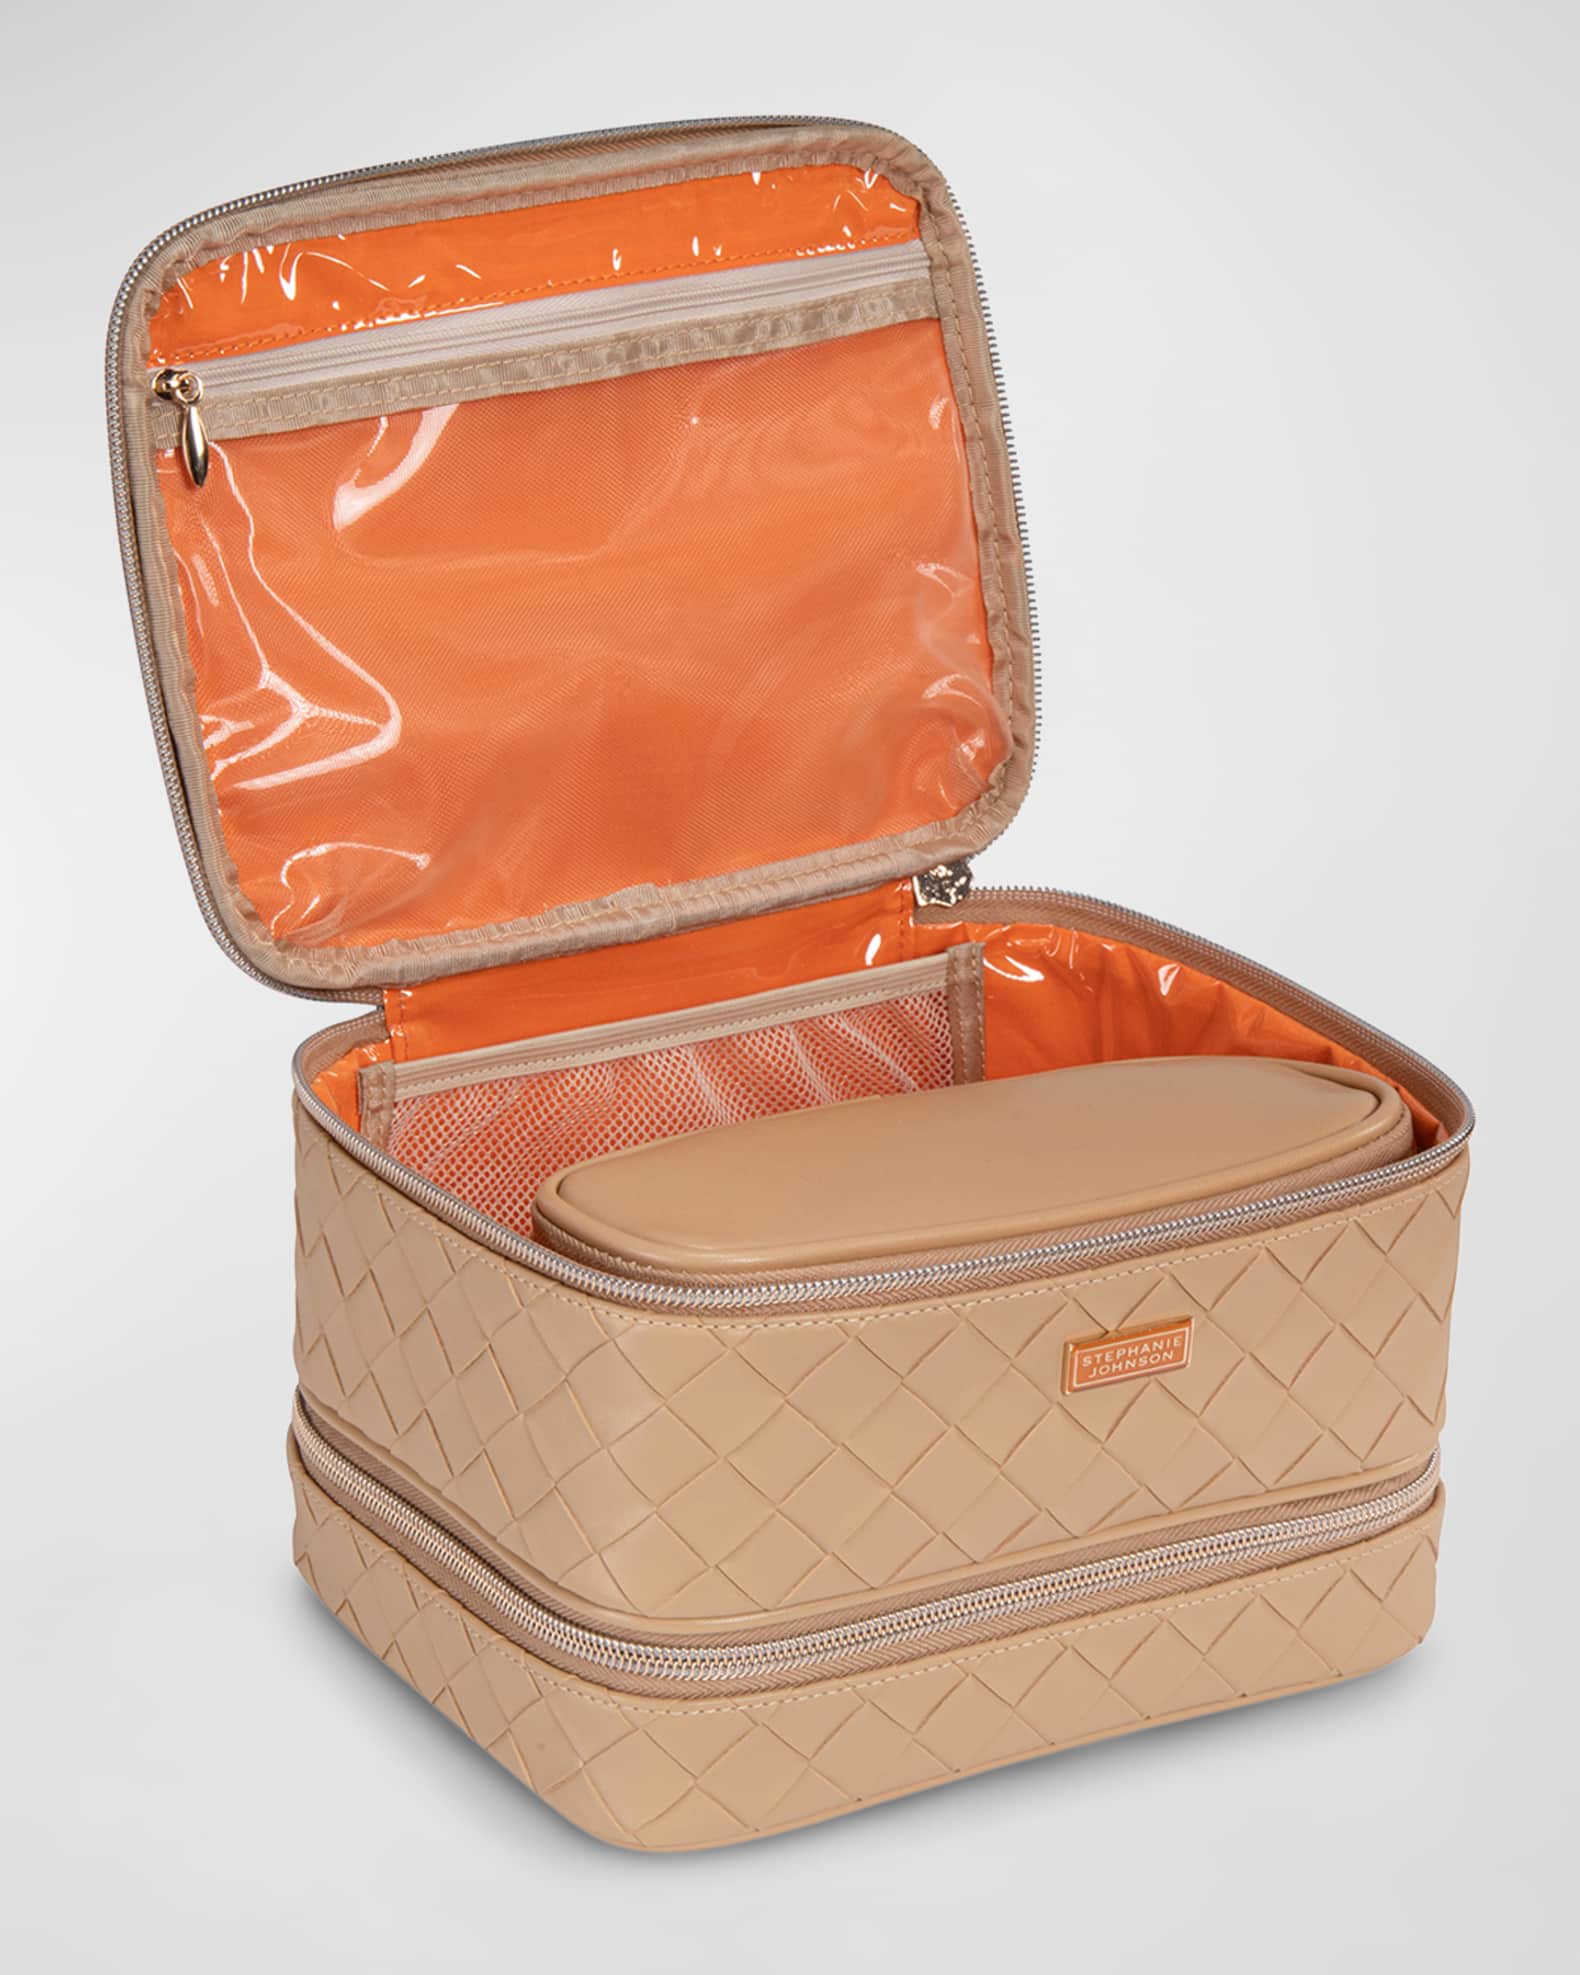 Dior - Multipocket Blouson Orange Technical Fabric - Size 50 - Men